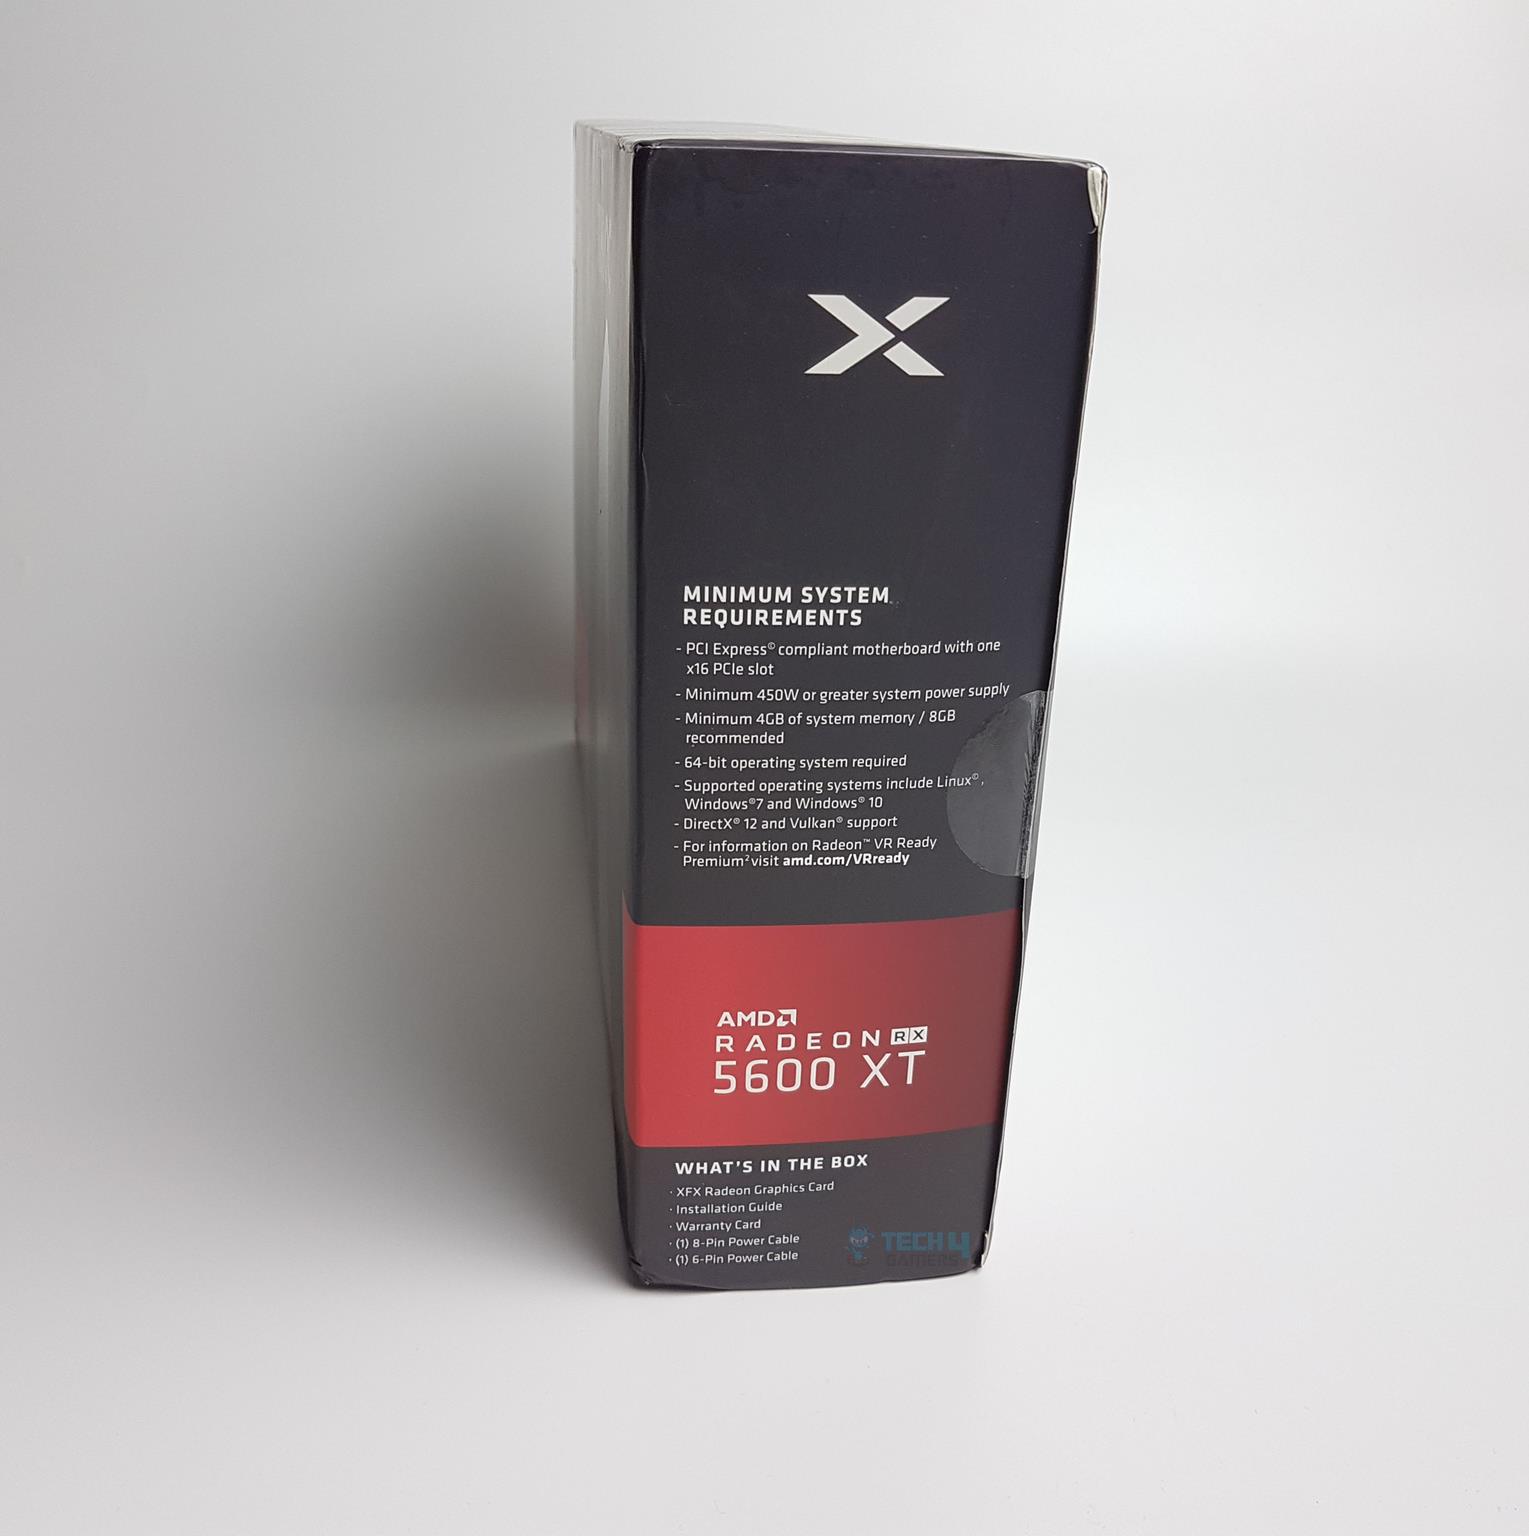 XFX AMD Radeon Packaging Side box